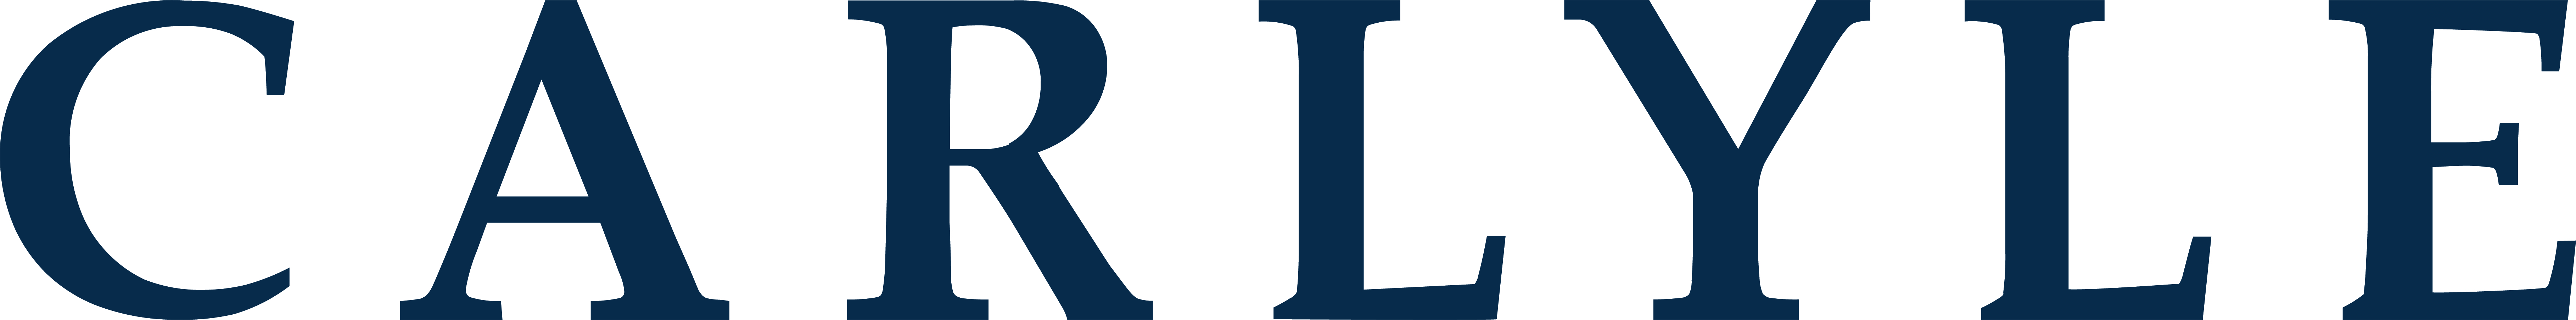 Carlyle-Logo-Blue.jpg